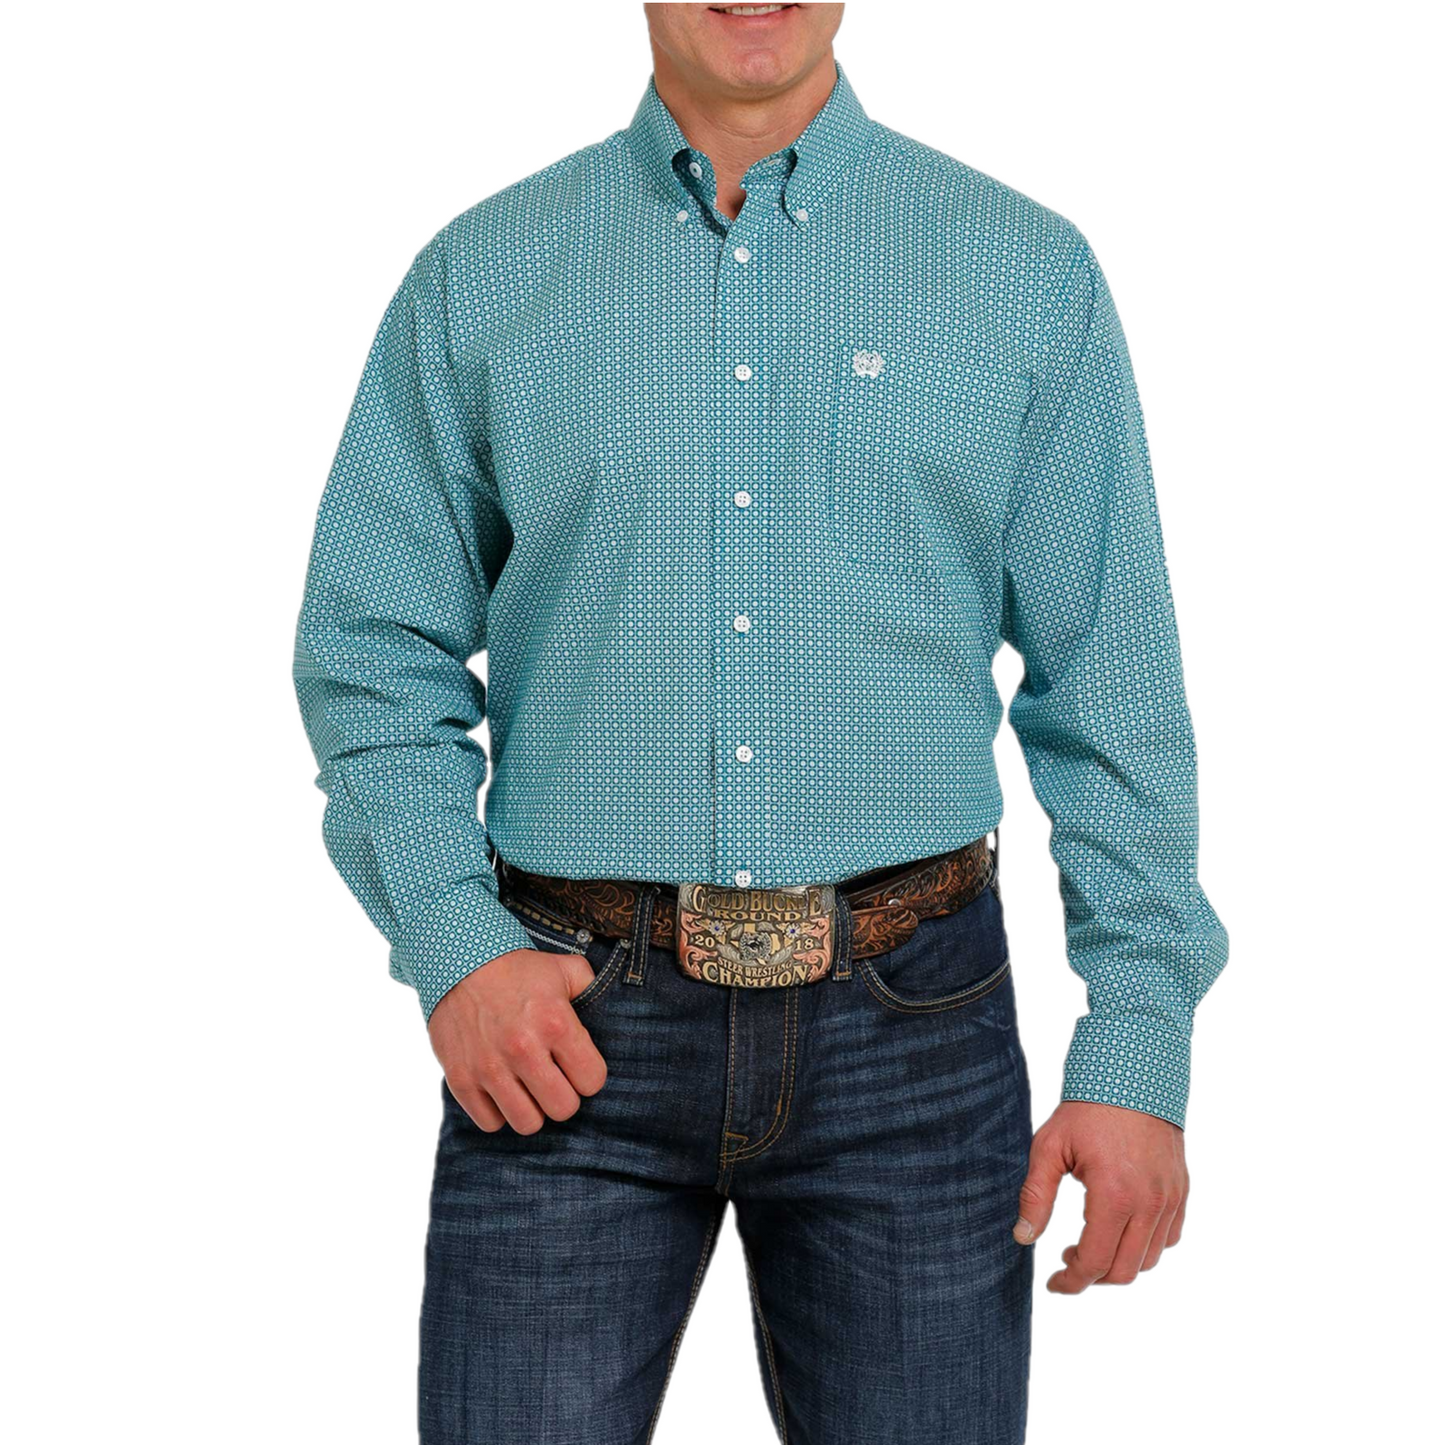 Cinch® Men's Plain Weave Print Teal Button Down Shirt MTW1105498